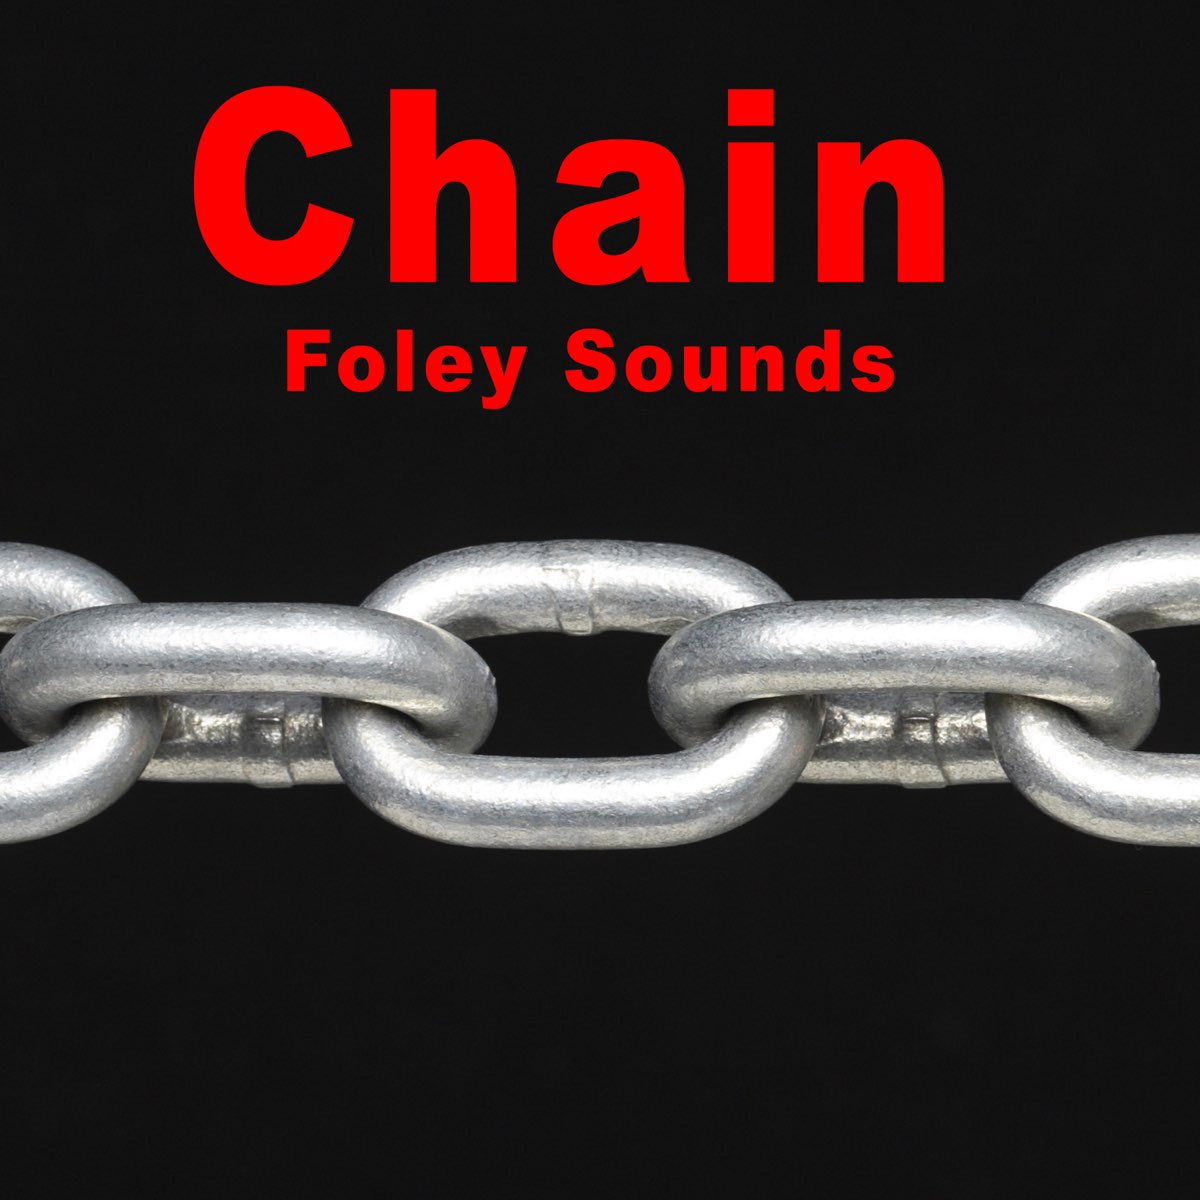 Chain Foley Sound Effects - Album by Sound Ideas - Apple Music